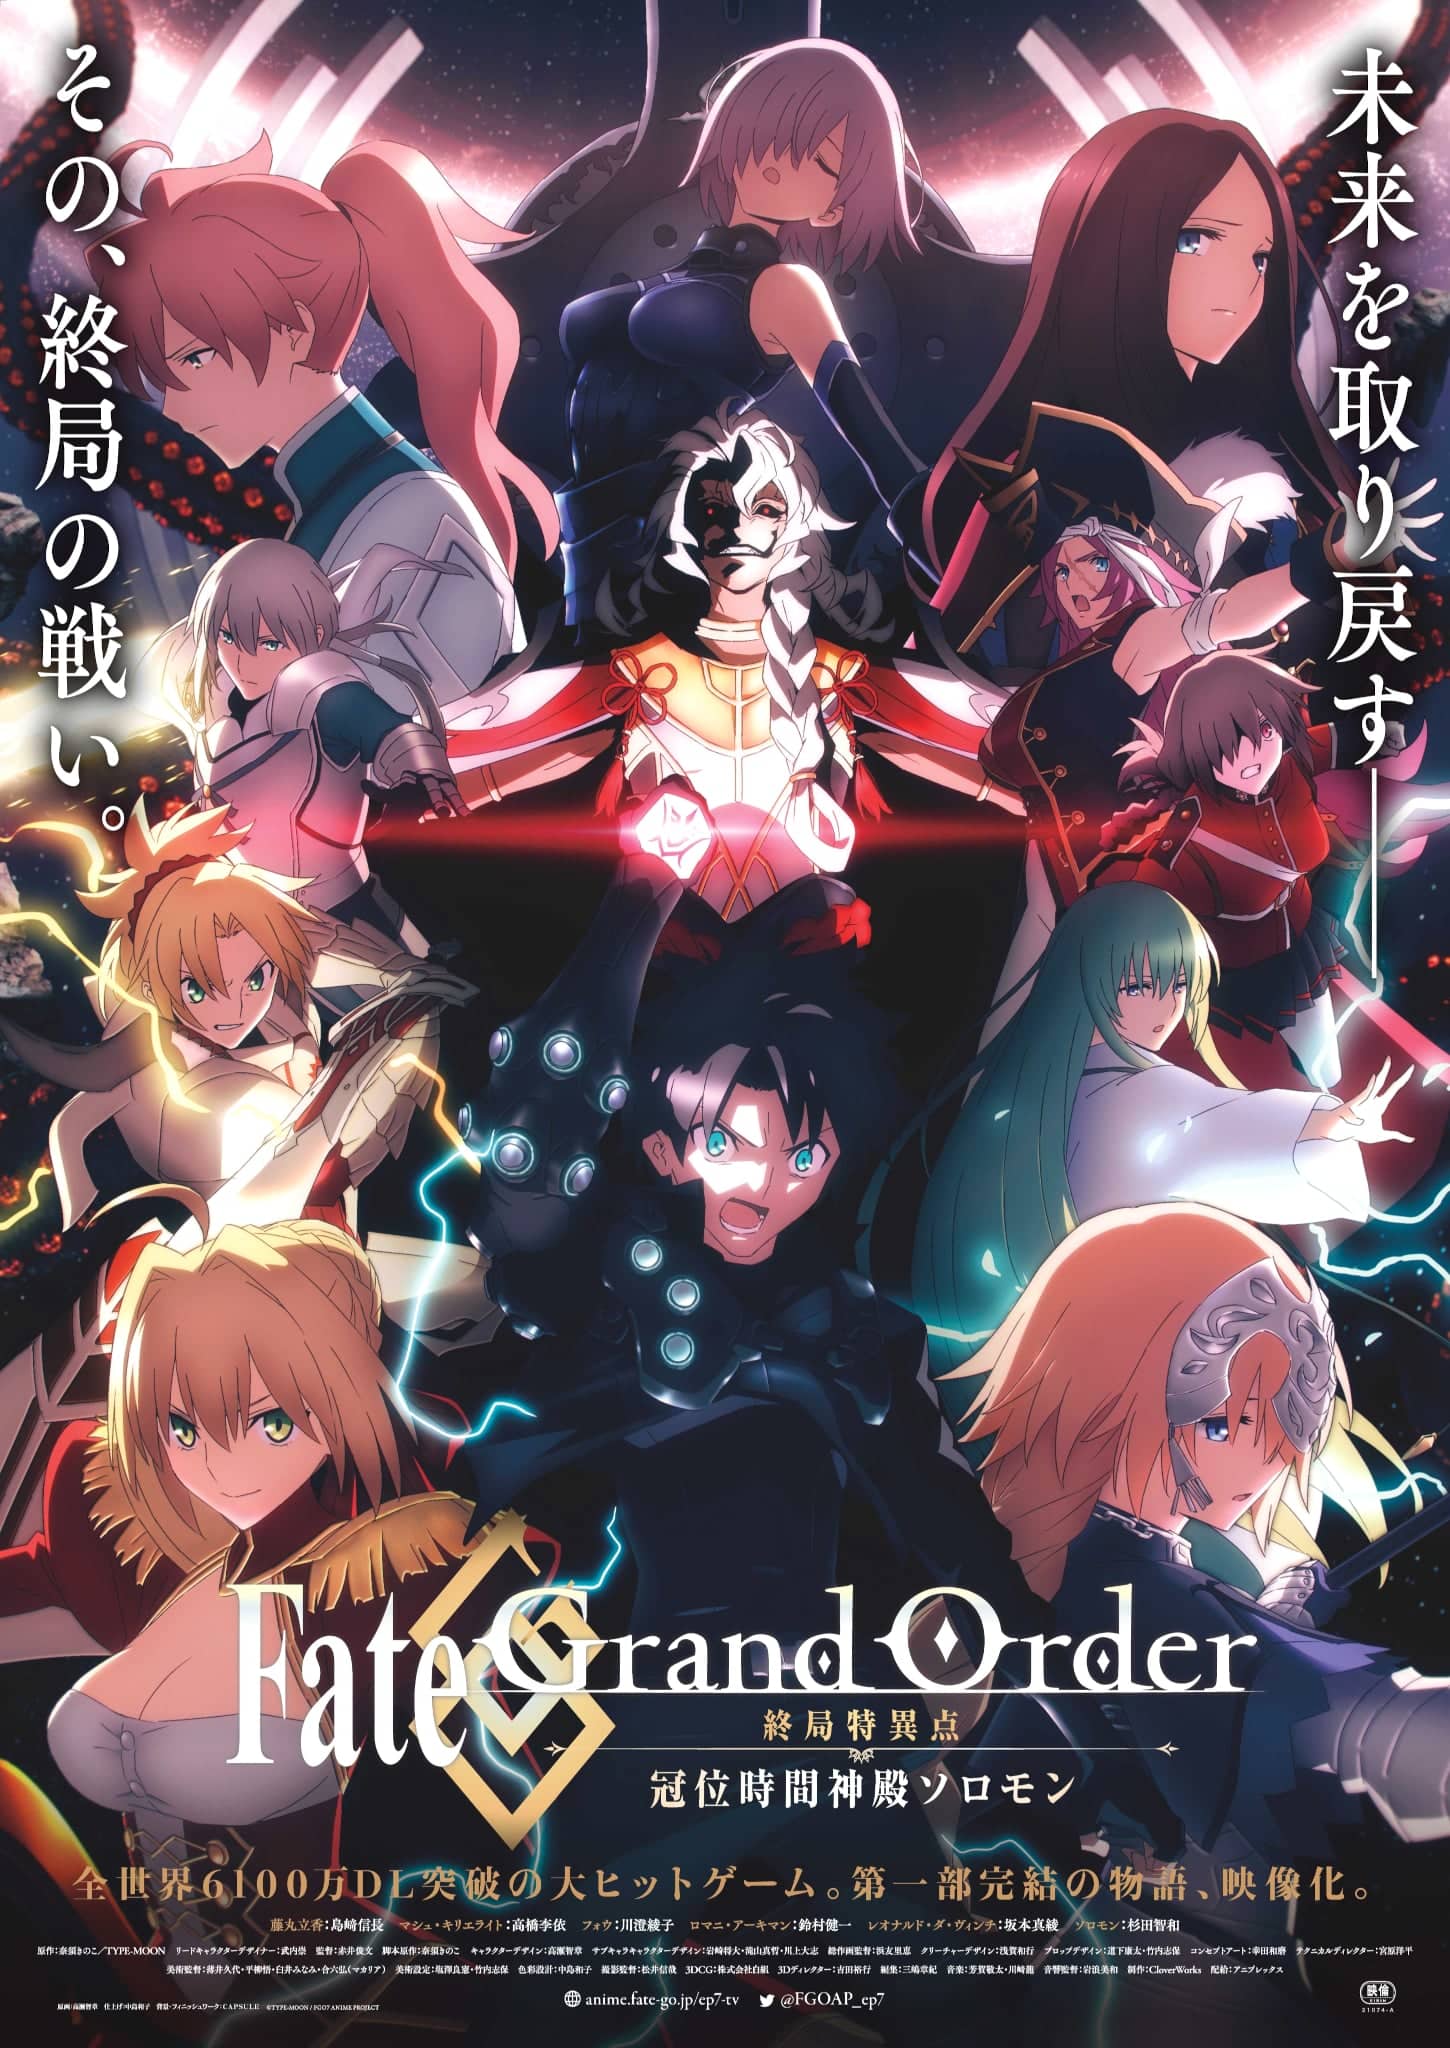 Premier visuel pour le film Fate/Grand Order Solomon